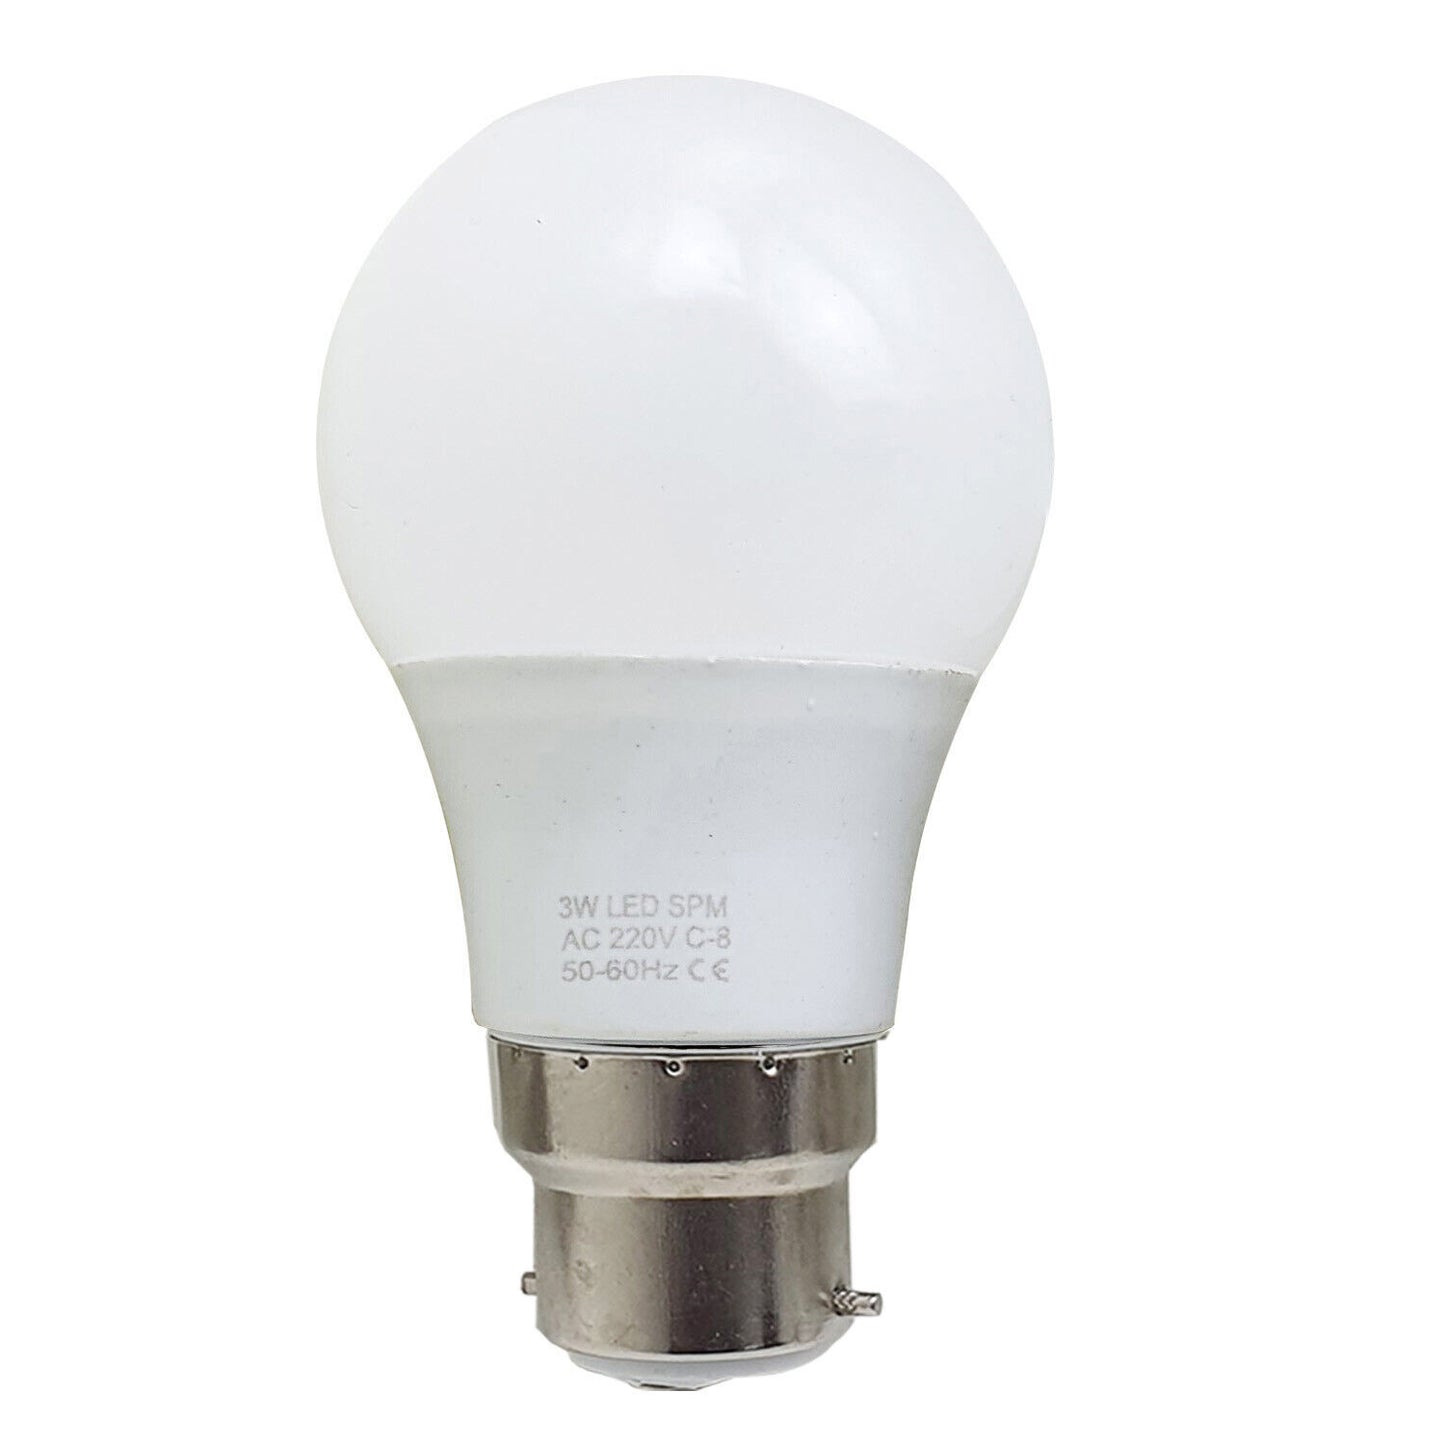 B22 3W Energy Saving Warm White LED Light Bulbs A60 B22 Screw-in non dimmable bulbs